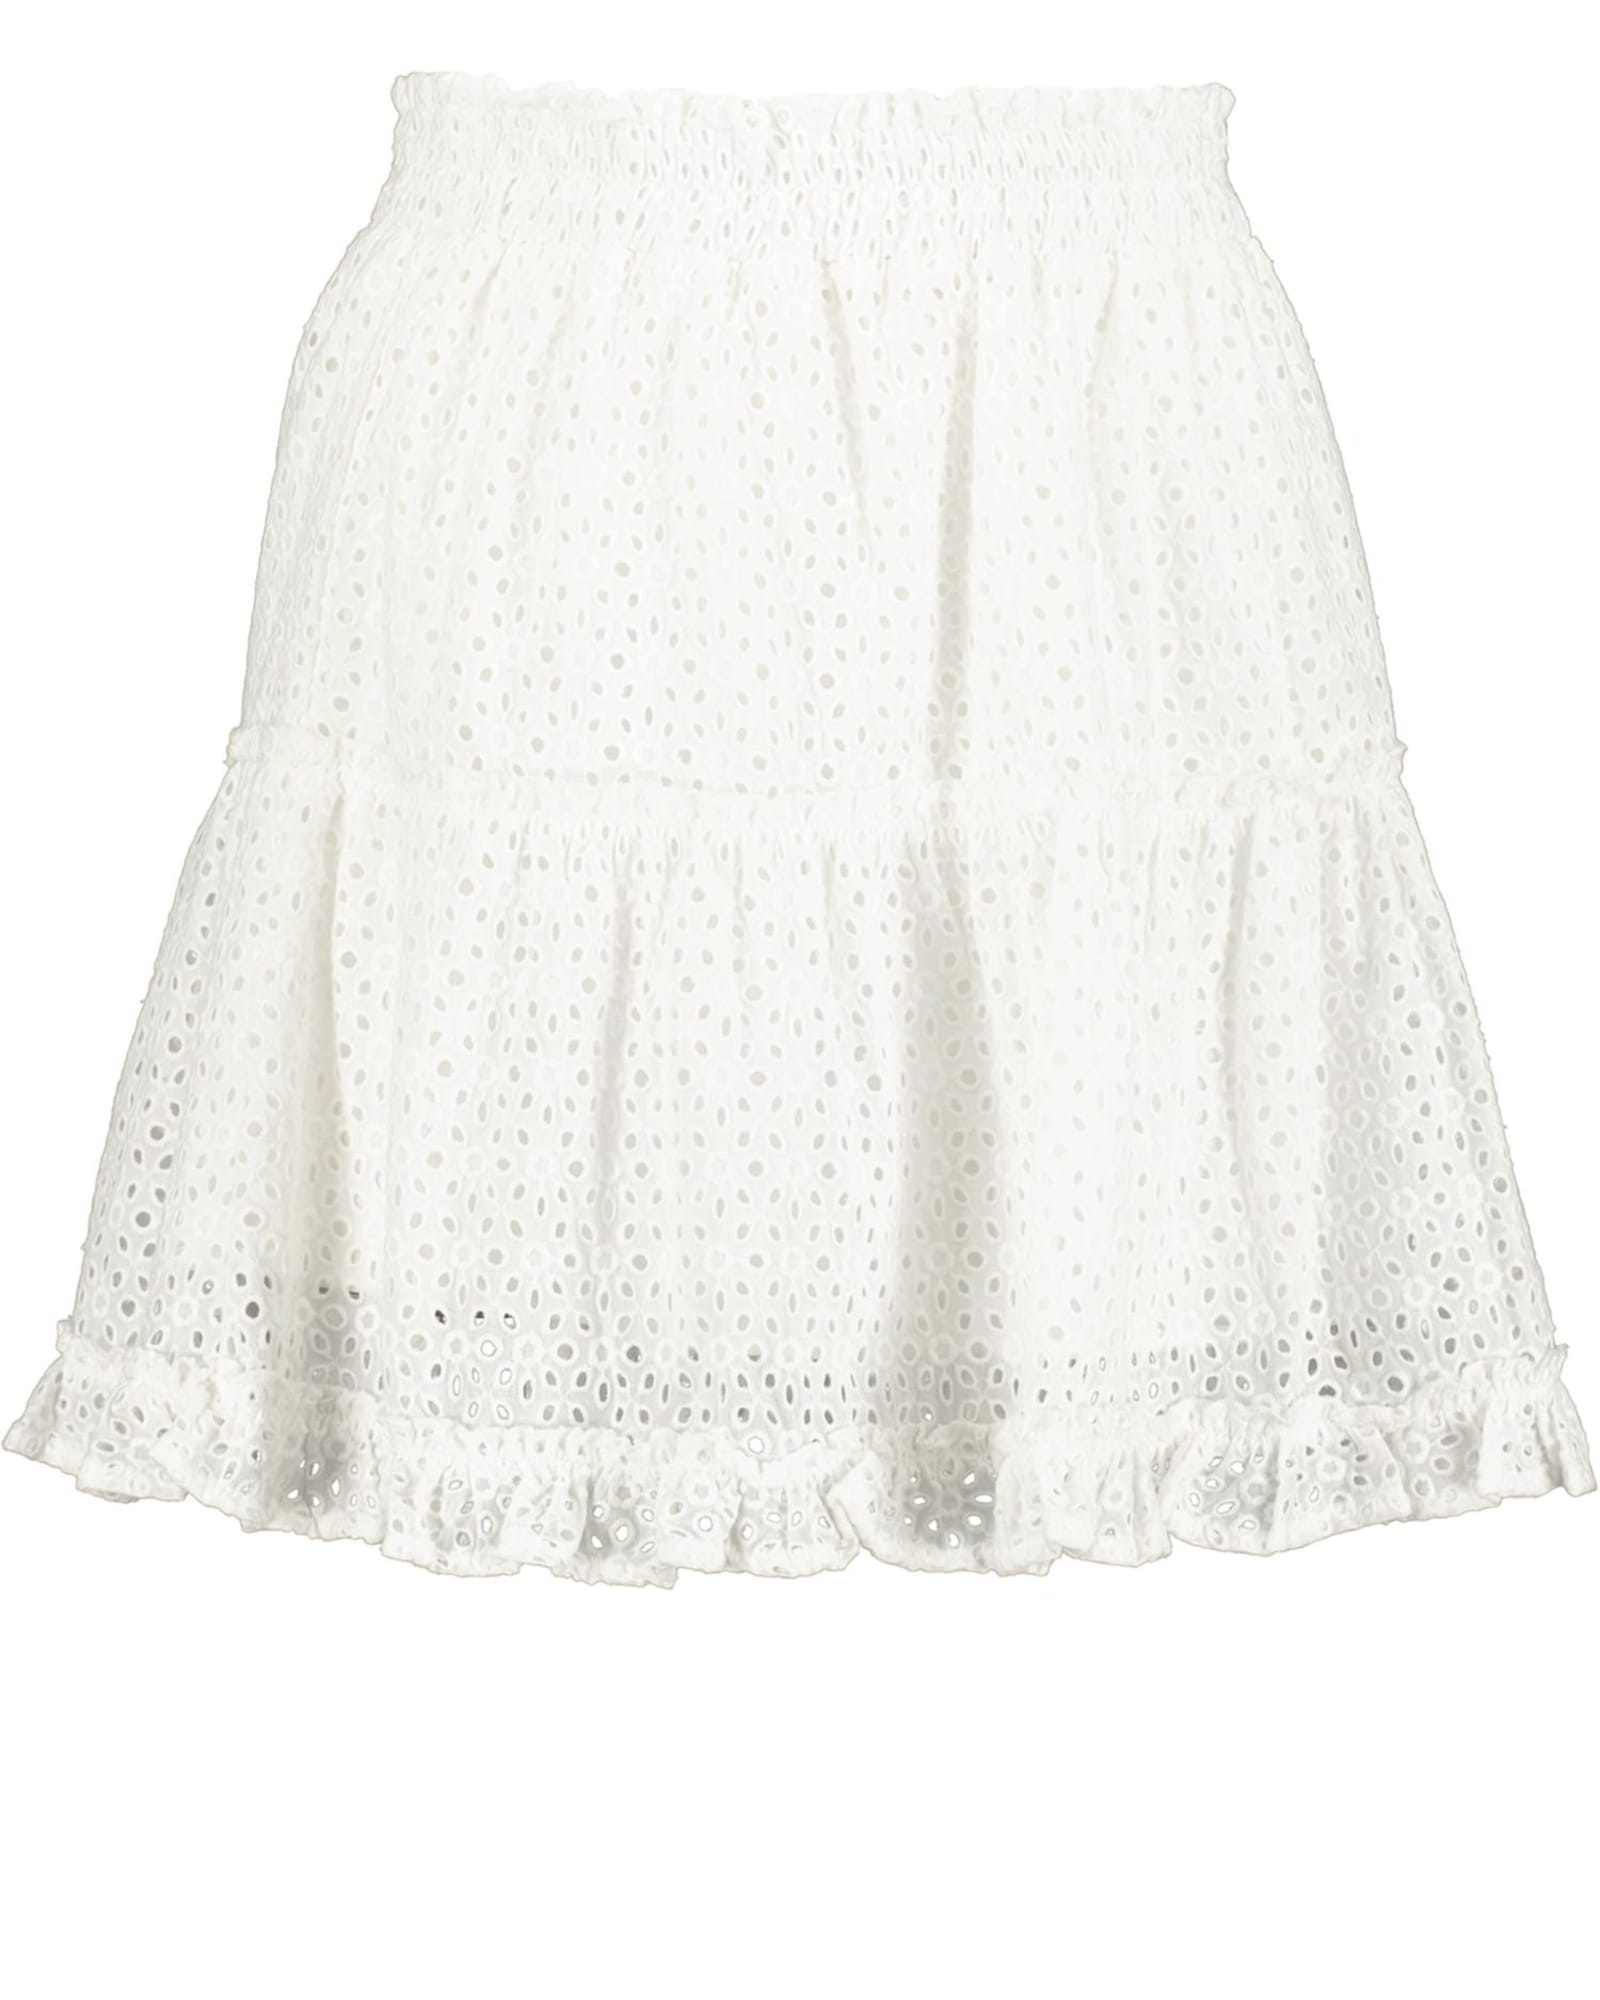 Eyelet Ruffle Mini Skirt in White Eyelet | White Eyelet